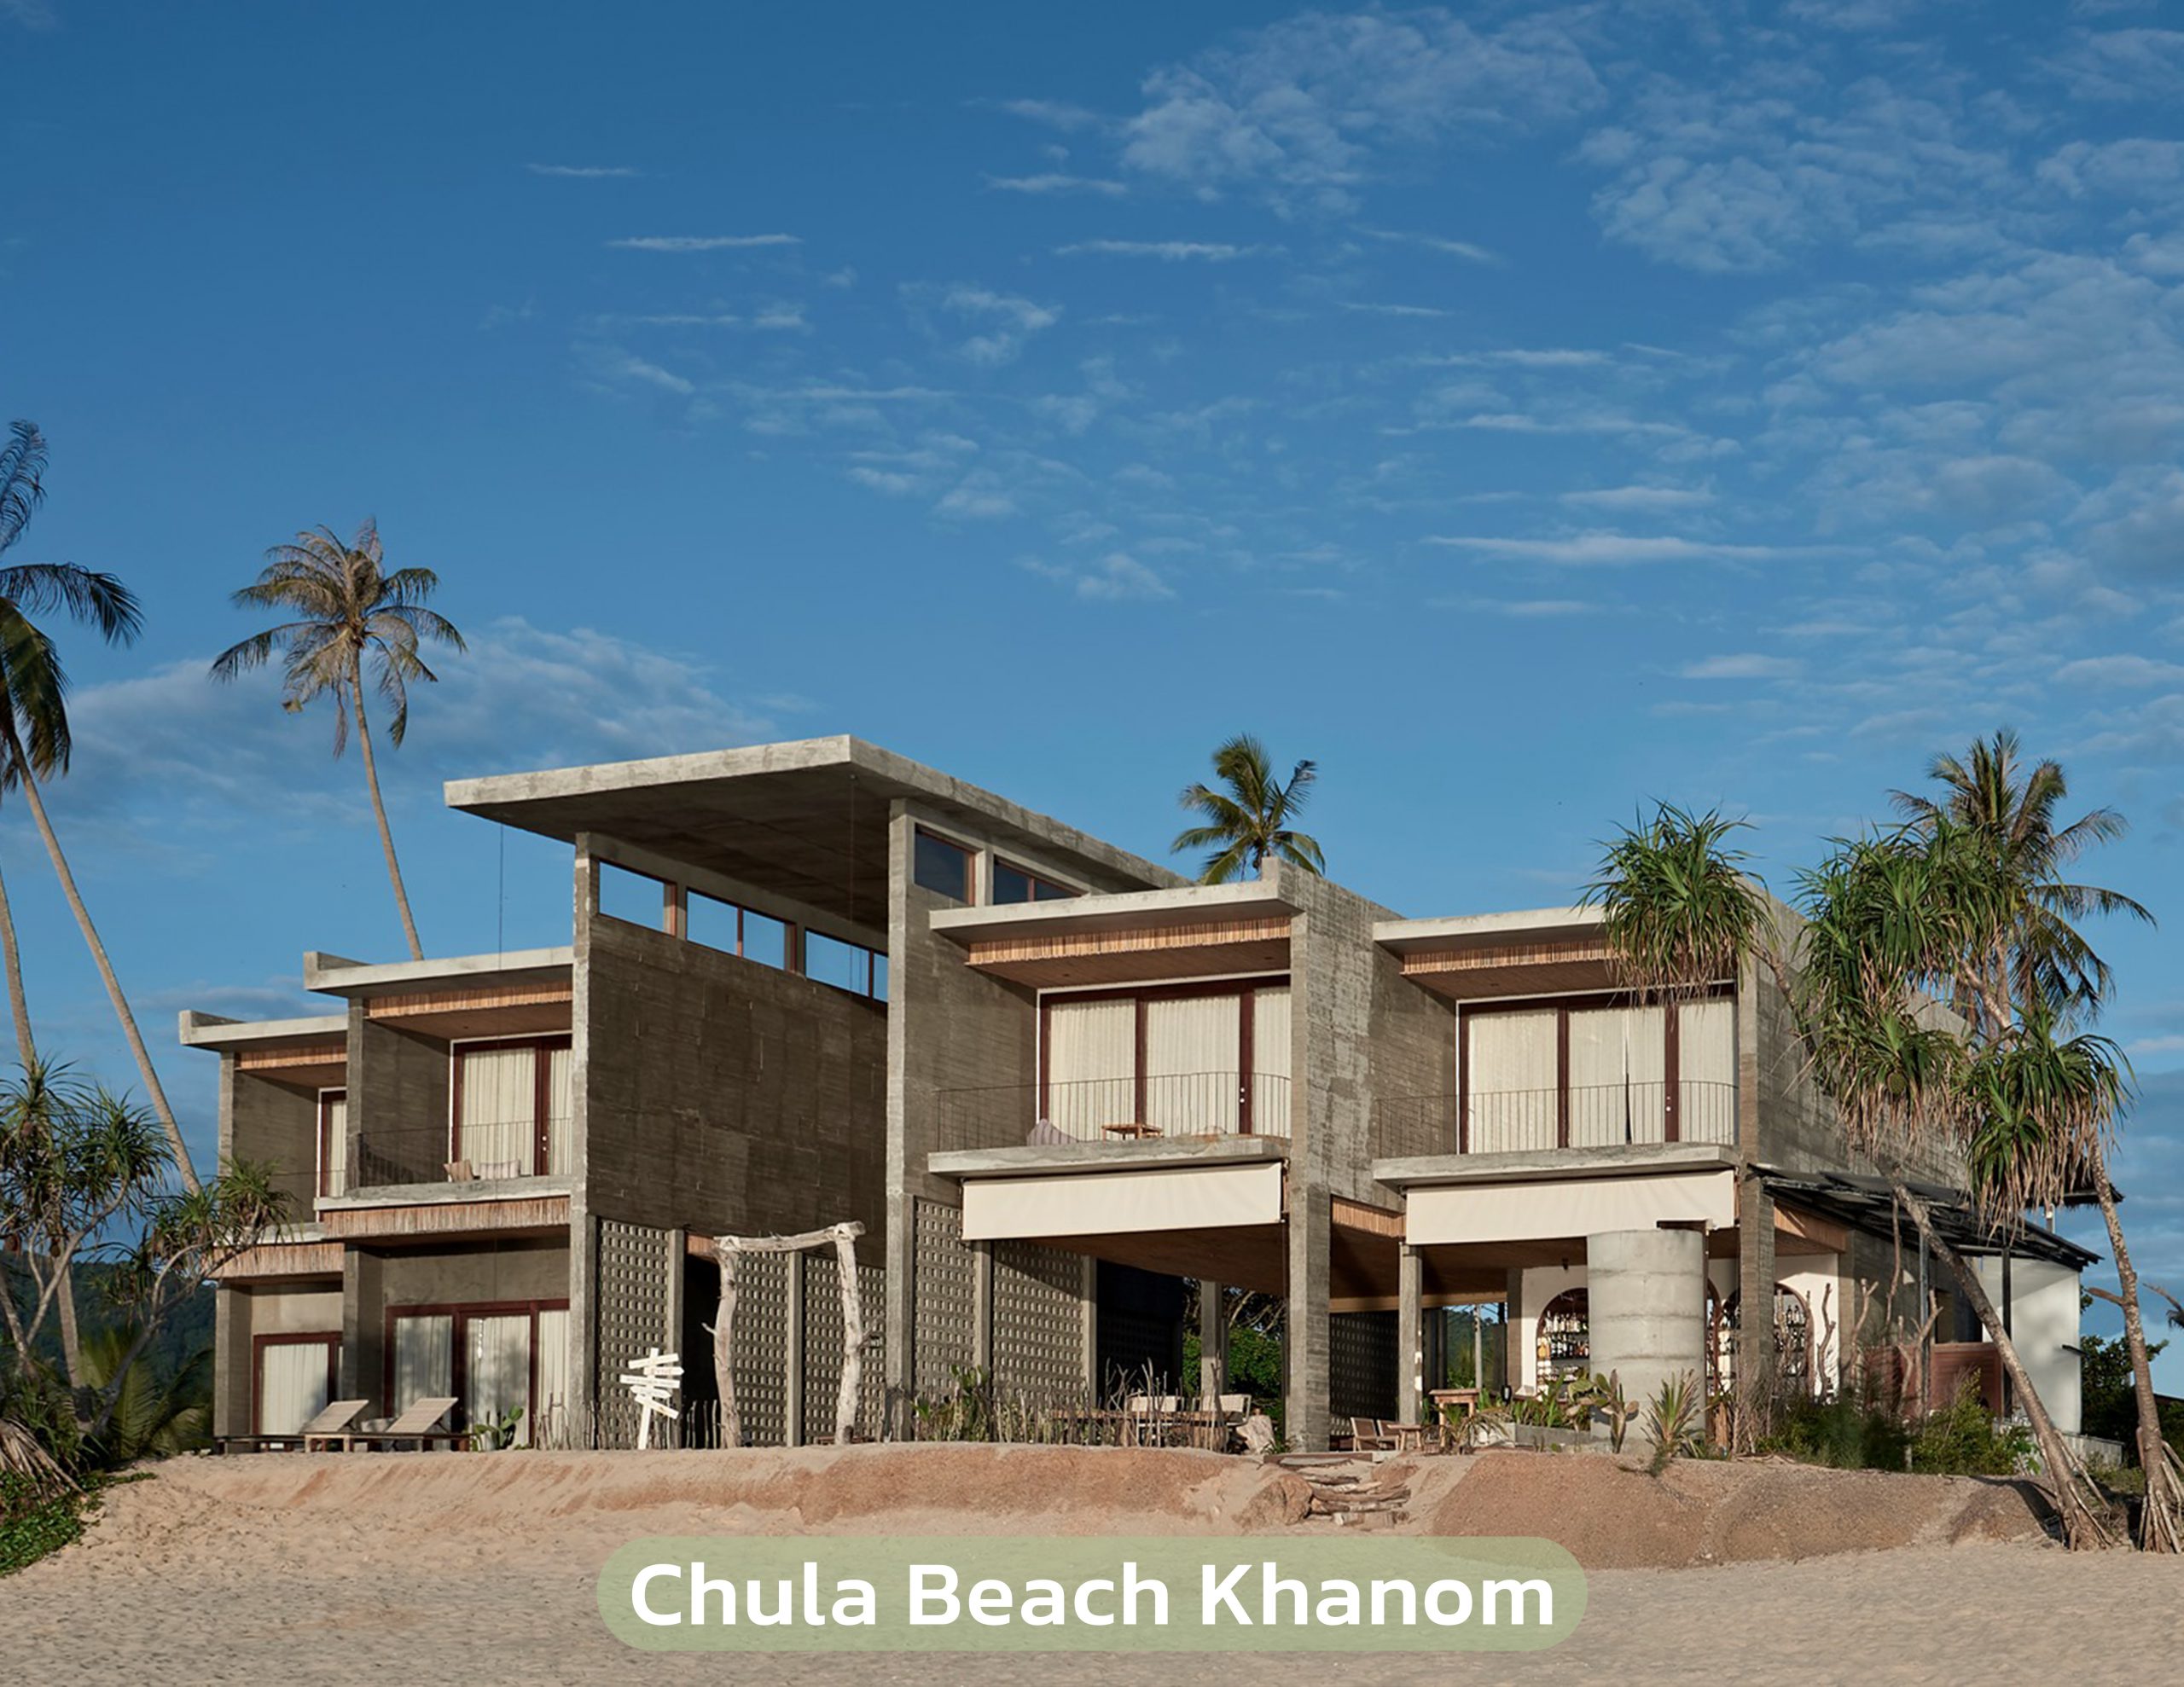 Chula Beach Khanom